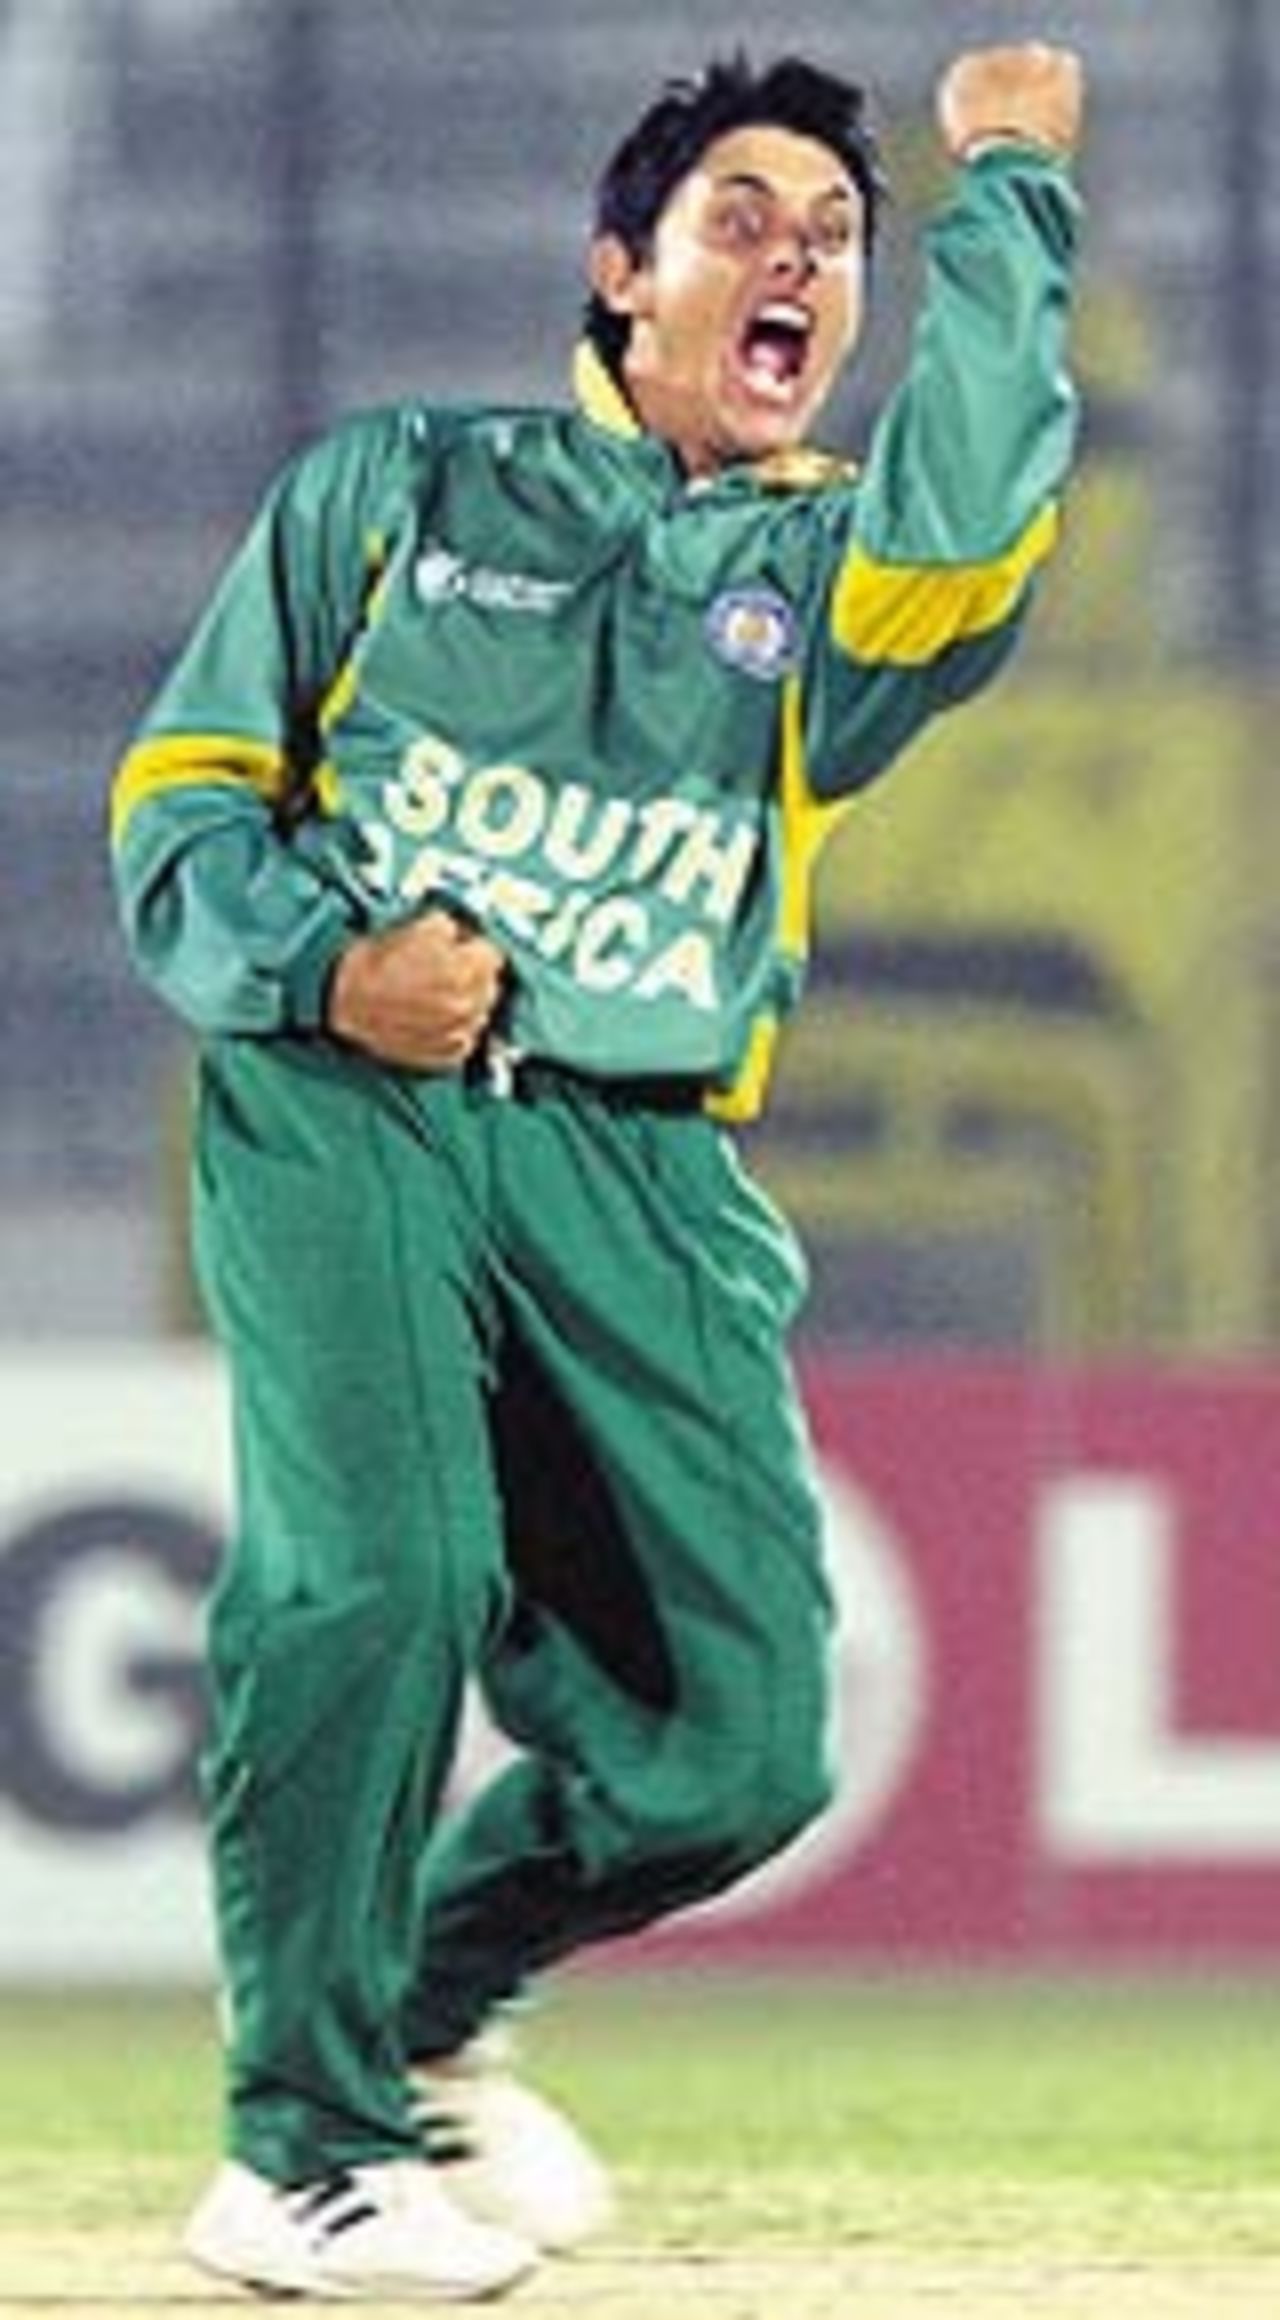 Vaughn Jaarsveld gestures as he celebrates after dismissing Praveen Gupta , India v South Africa, U19 World Cup, February 22, 2004